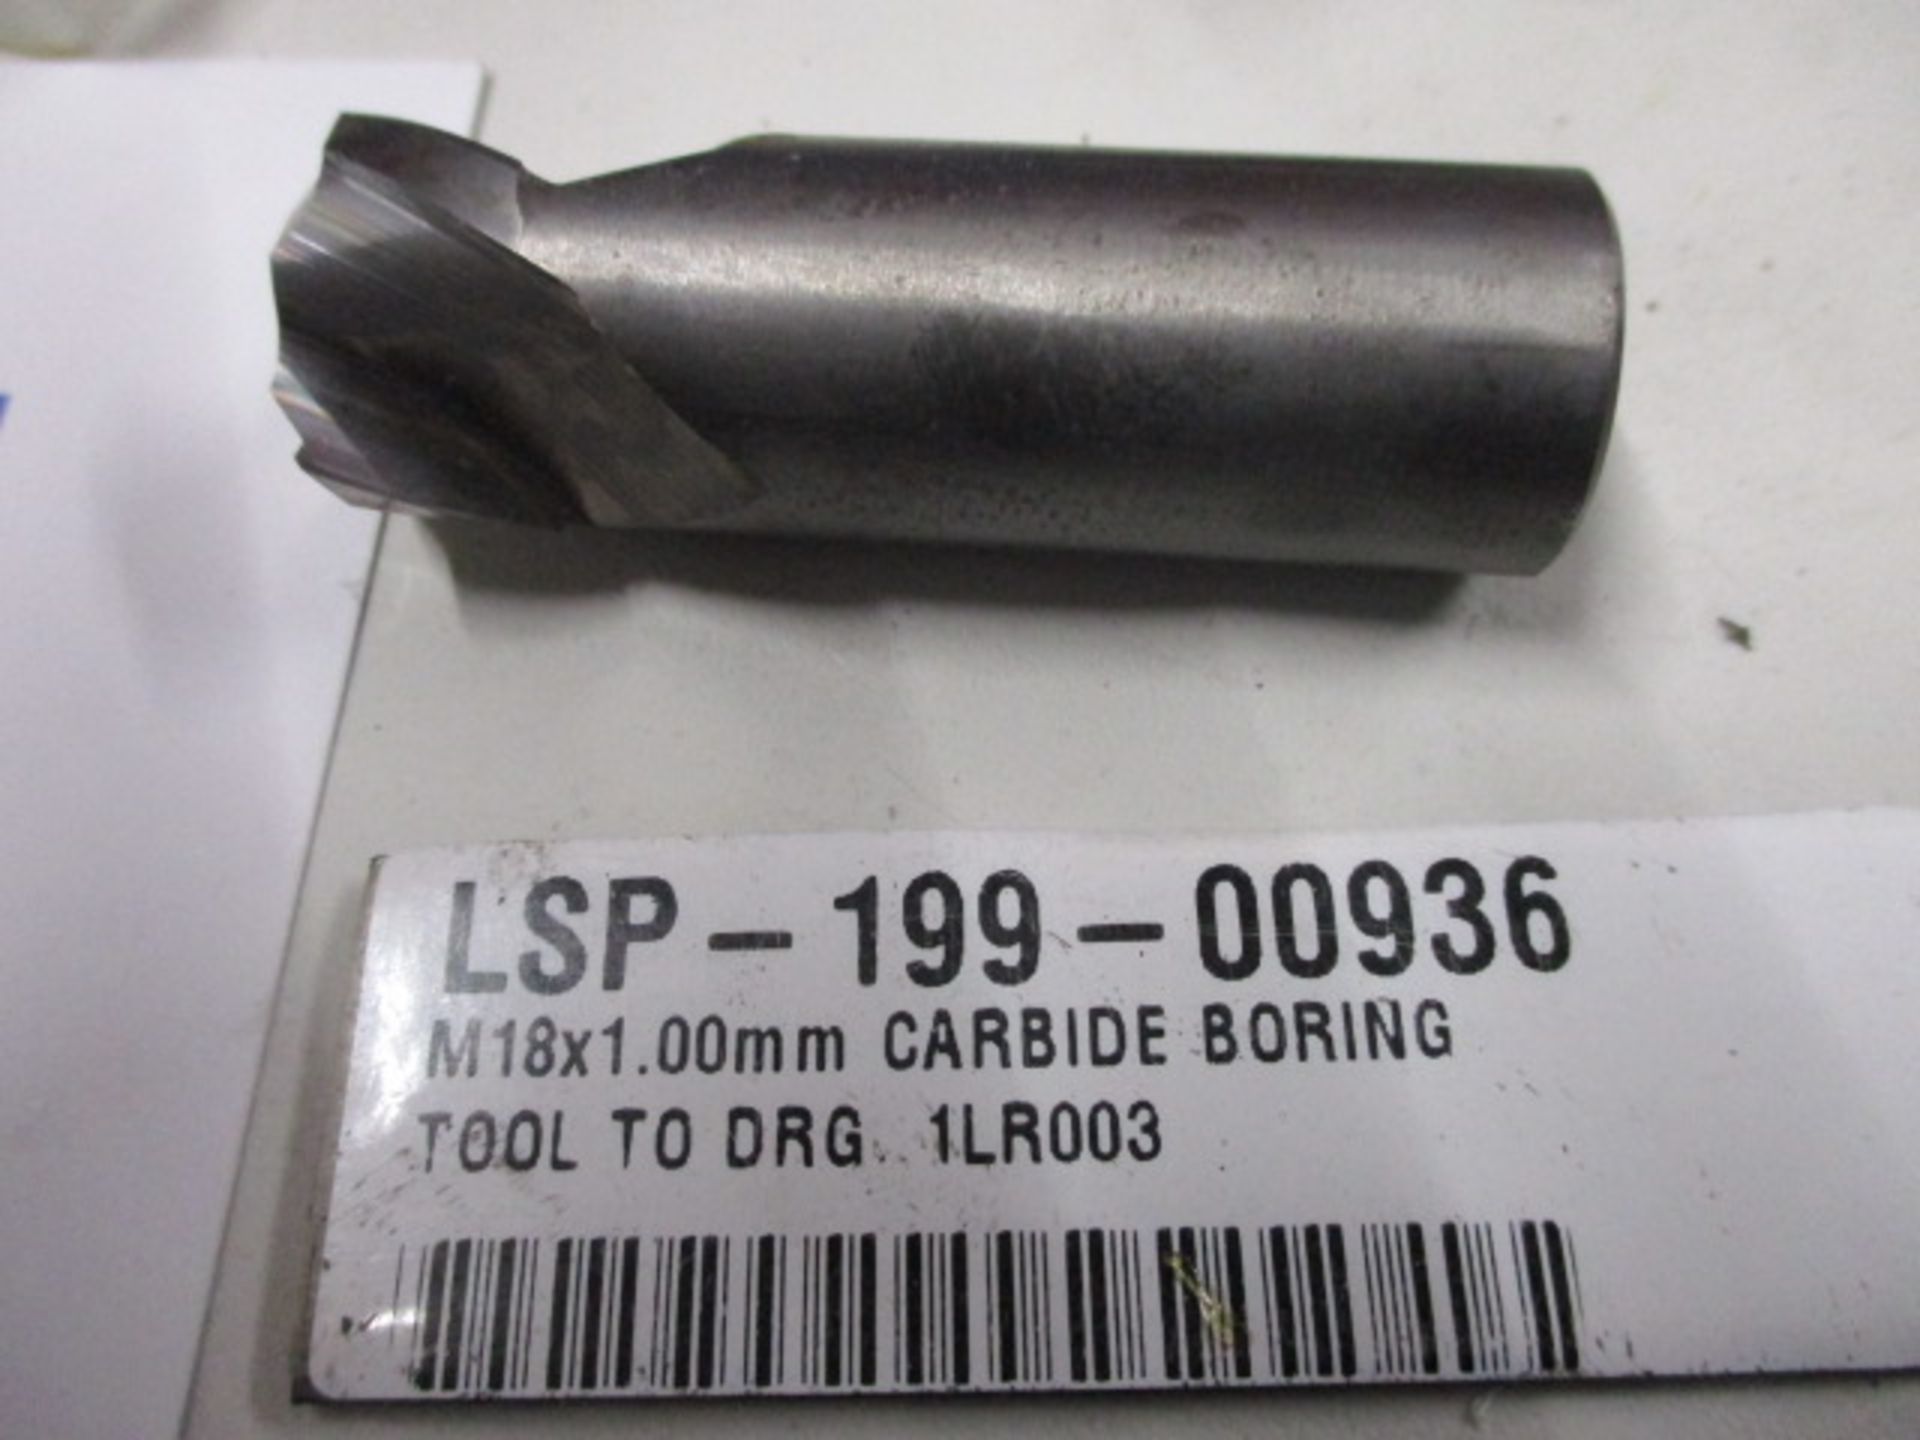 Carbide boring tool - Image 2 of 3